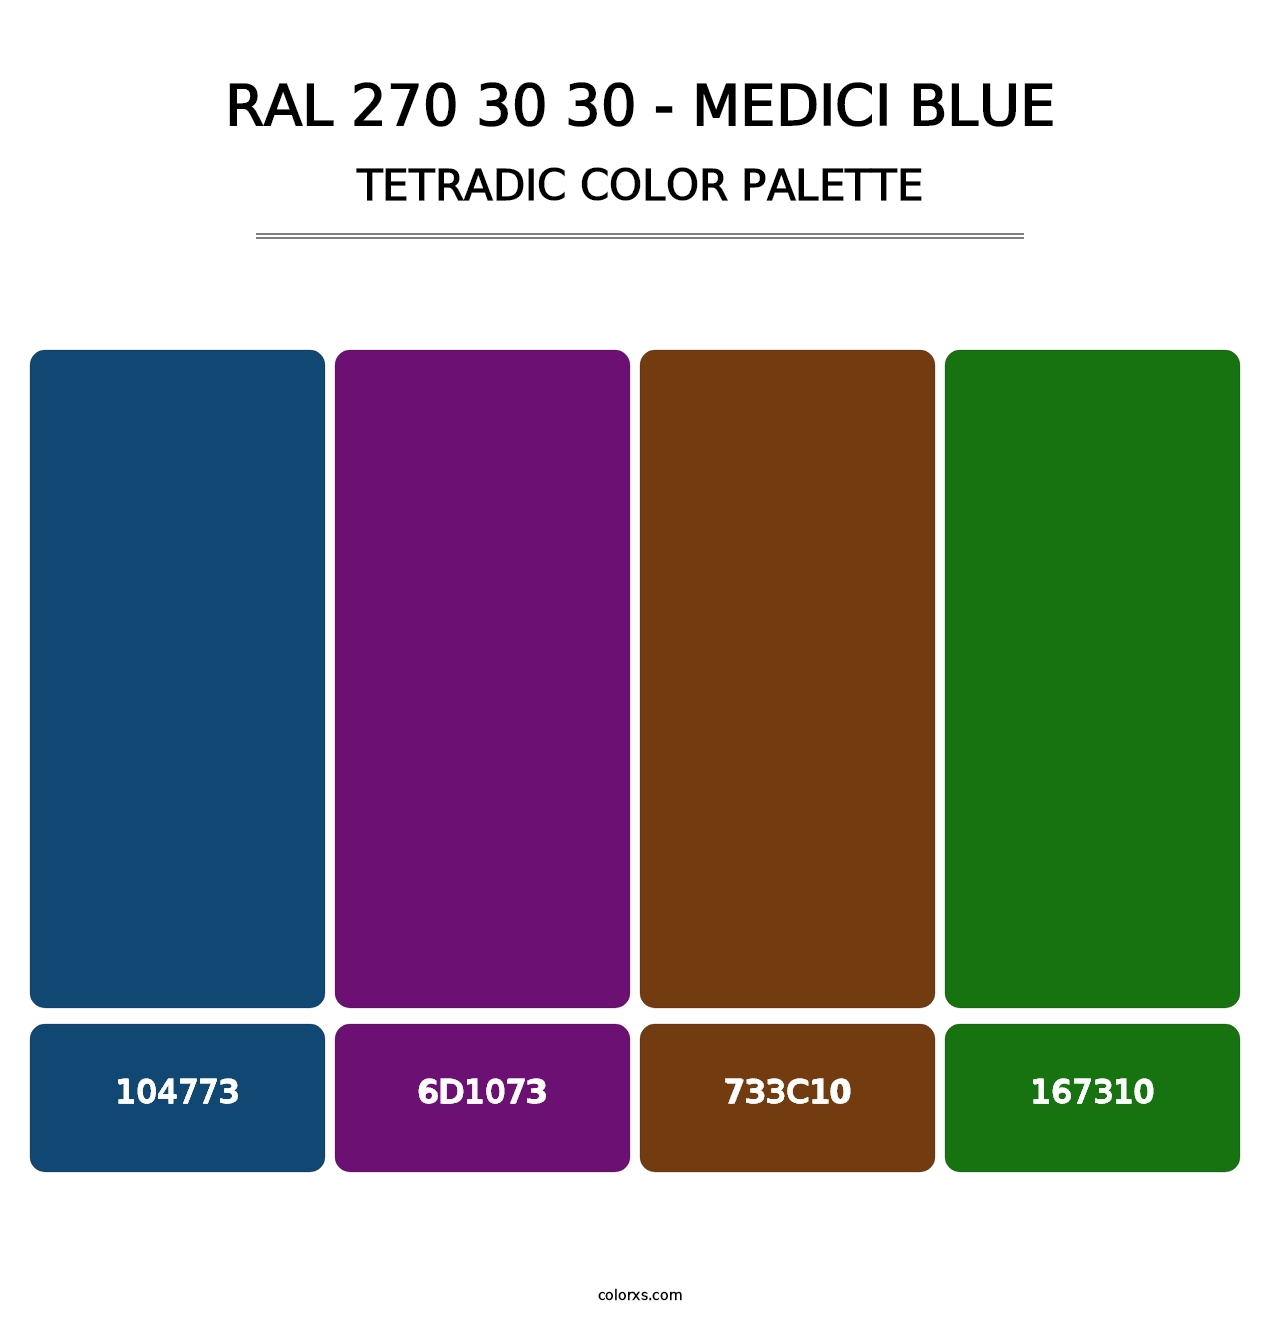 RAL 270 30 30 - Medici Blue - Tetradic Color Palette